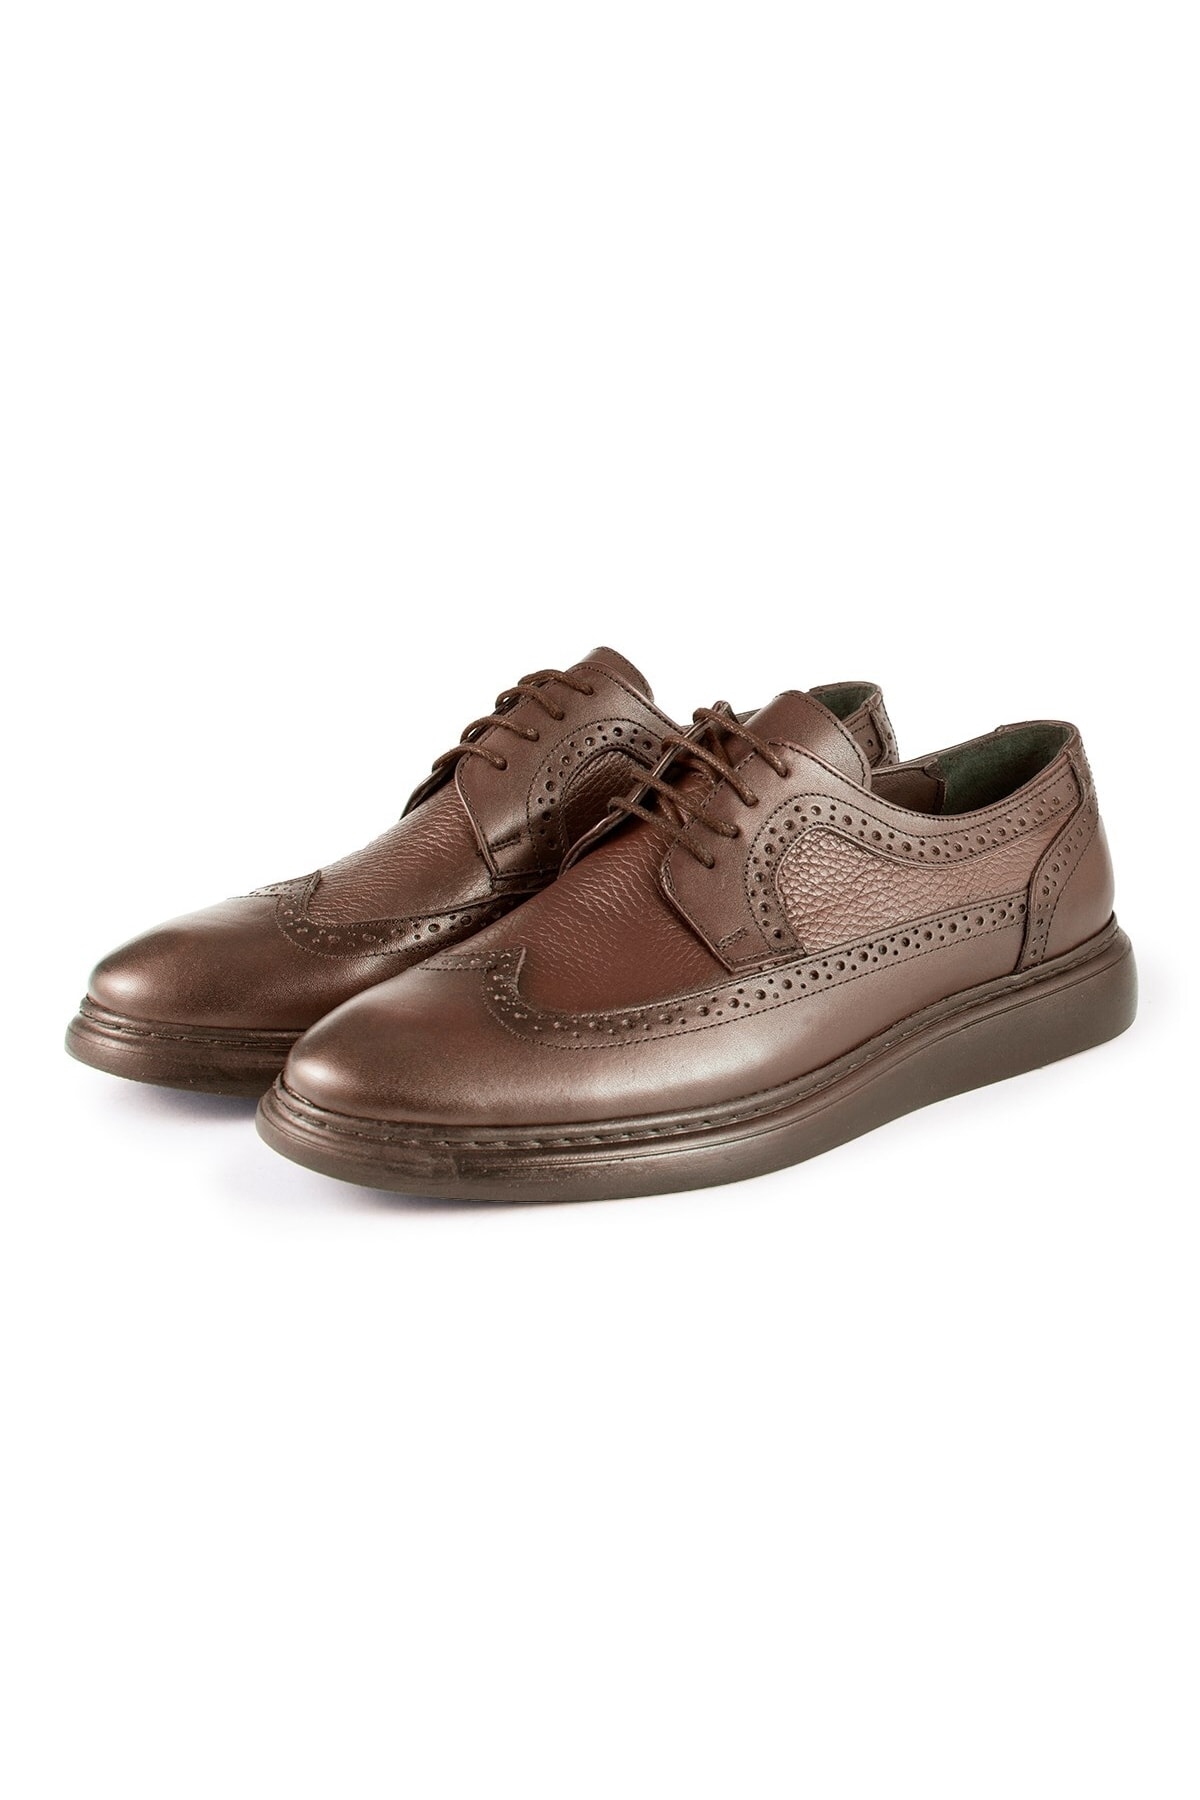 Levně Ducavelli Lusso Genuine Leather Men's Casual Classic Shoes, Genuine Leather Classic Shoes, Derby Classic.